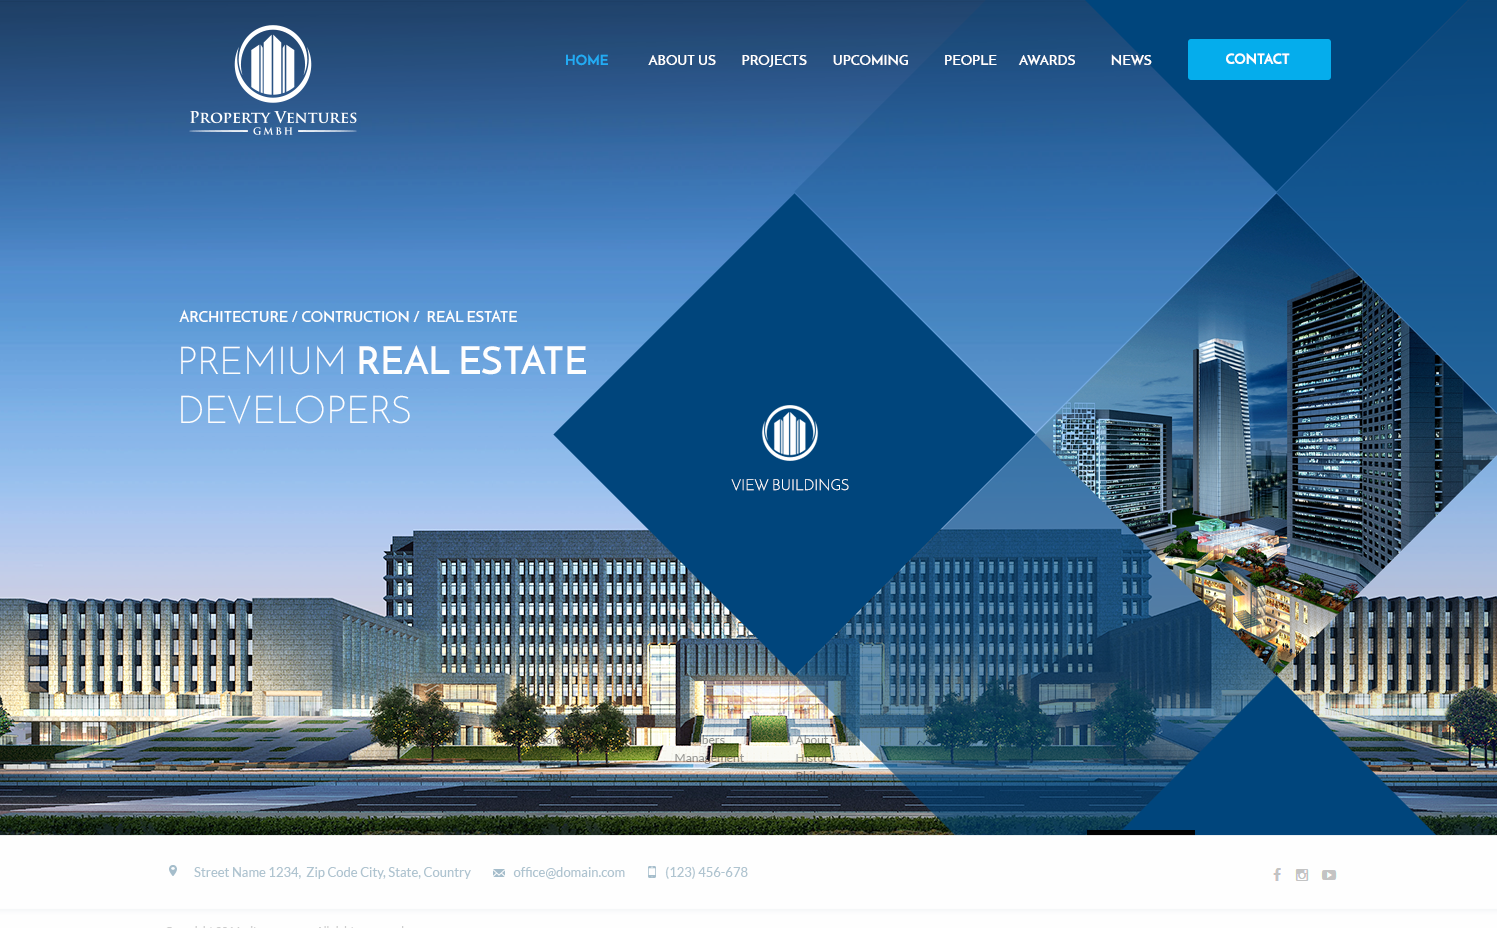 Real Estate Website Templates - GoDaddy